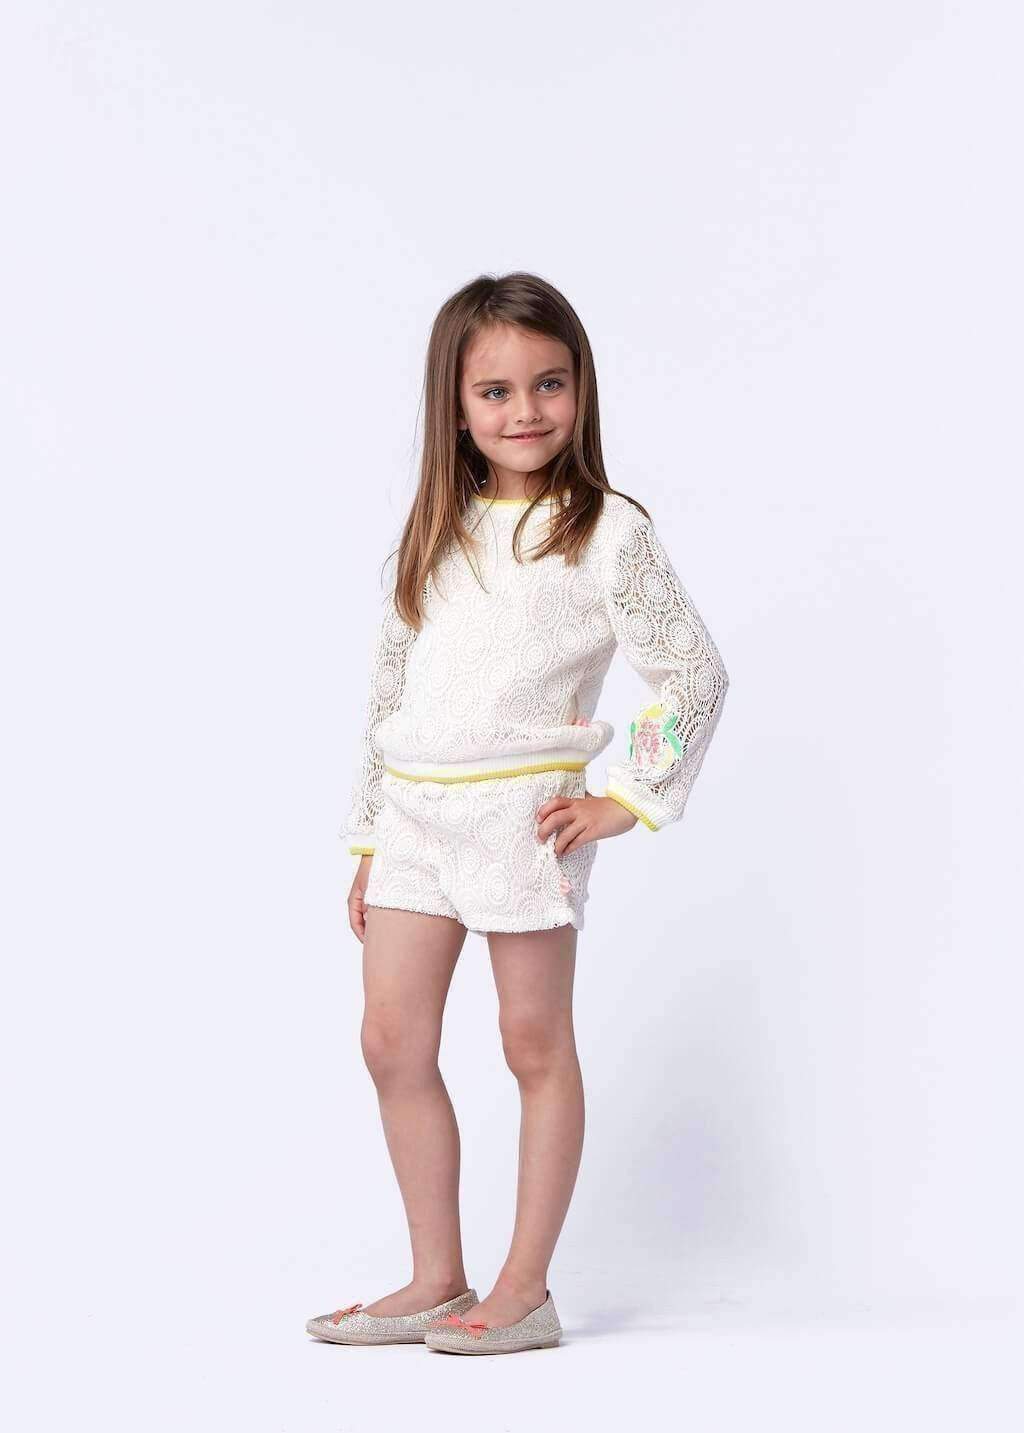 Cream Lace Shorts-Shorts-Billieblush-kids atelier